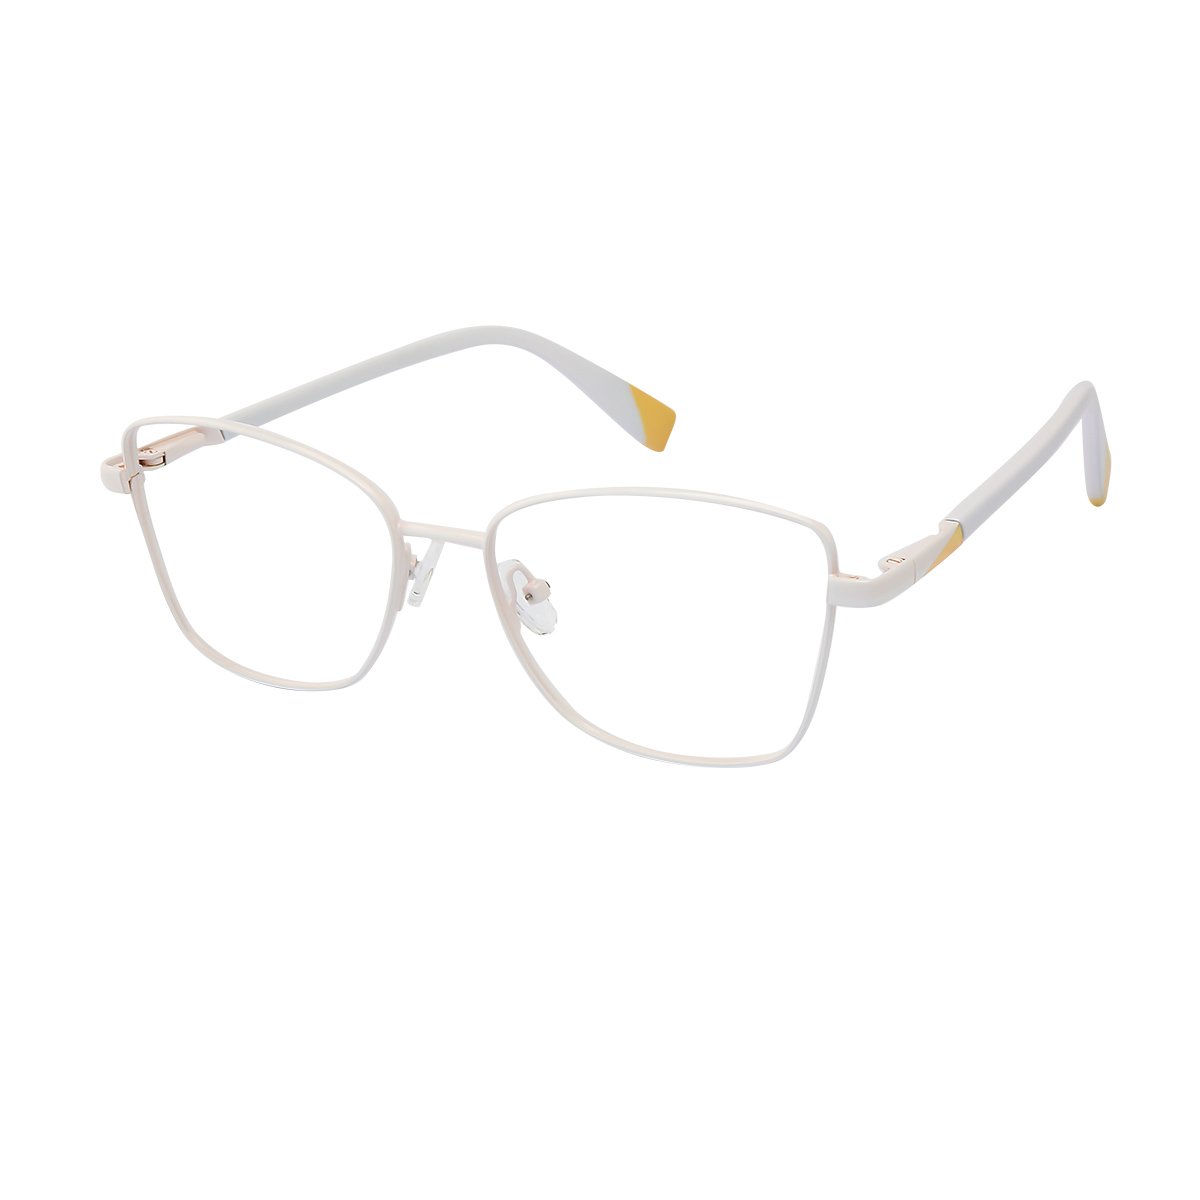 Gwendoline - Square White Reading Glasses for Women